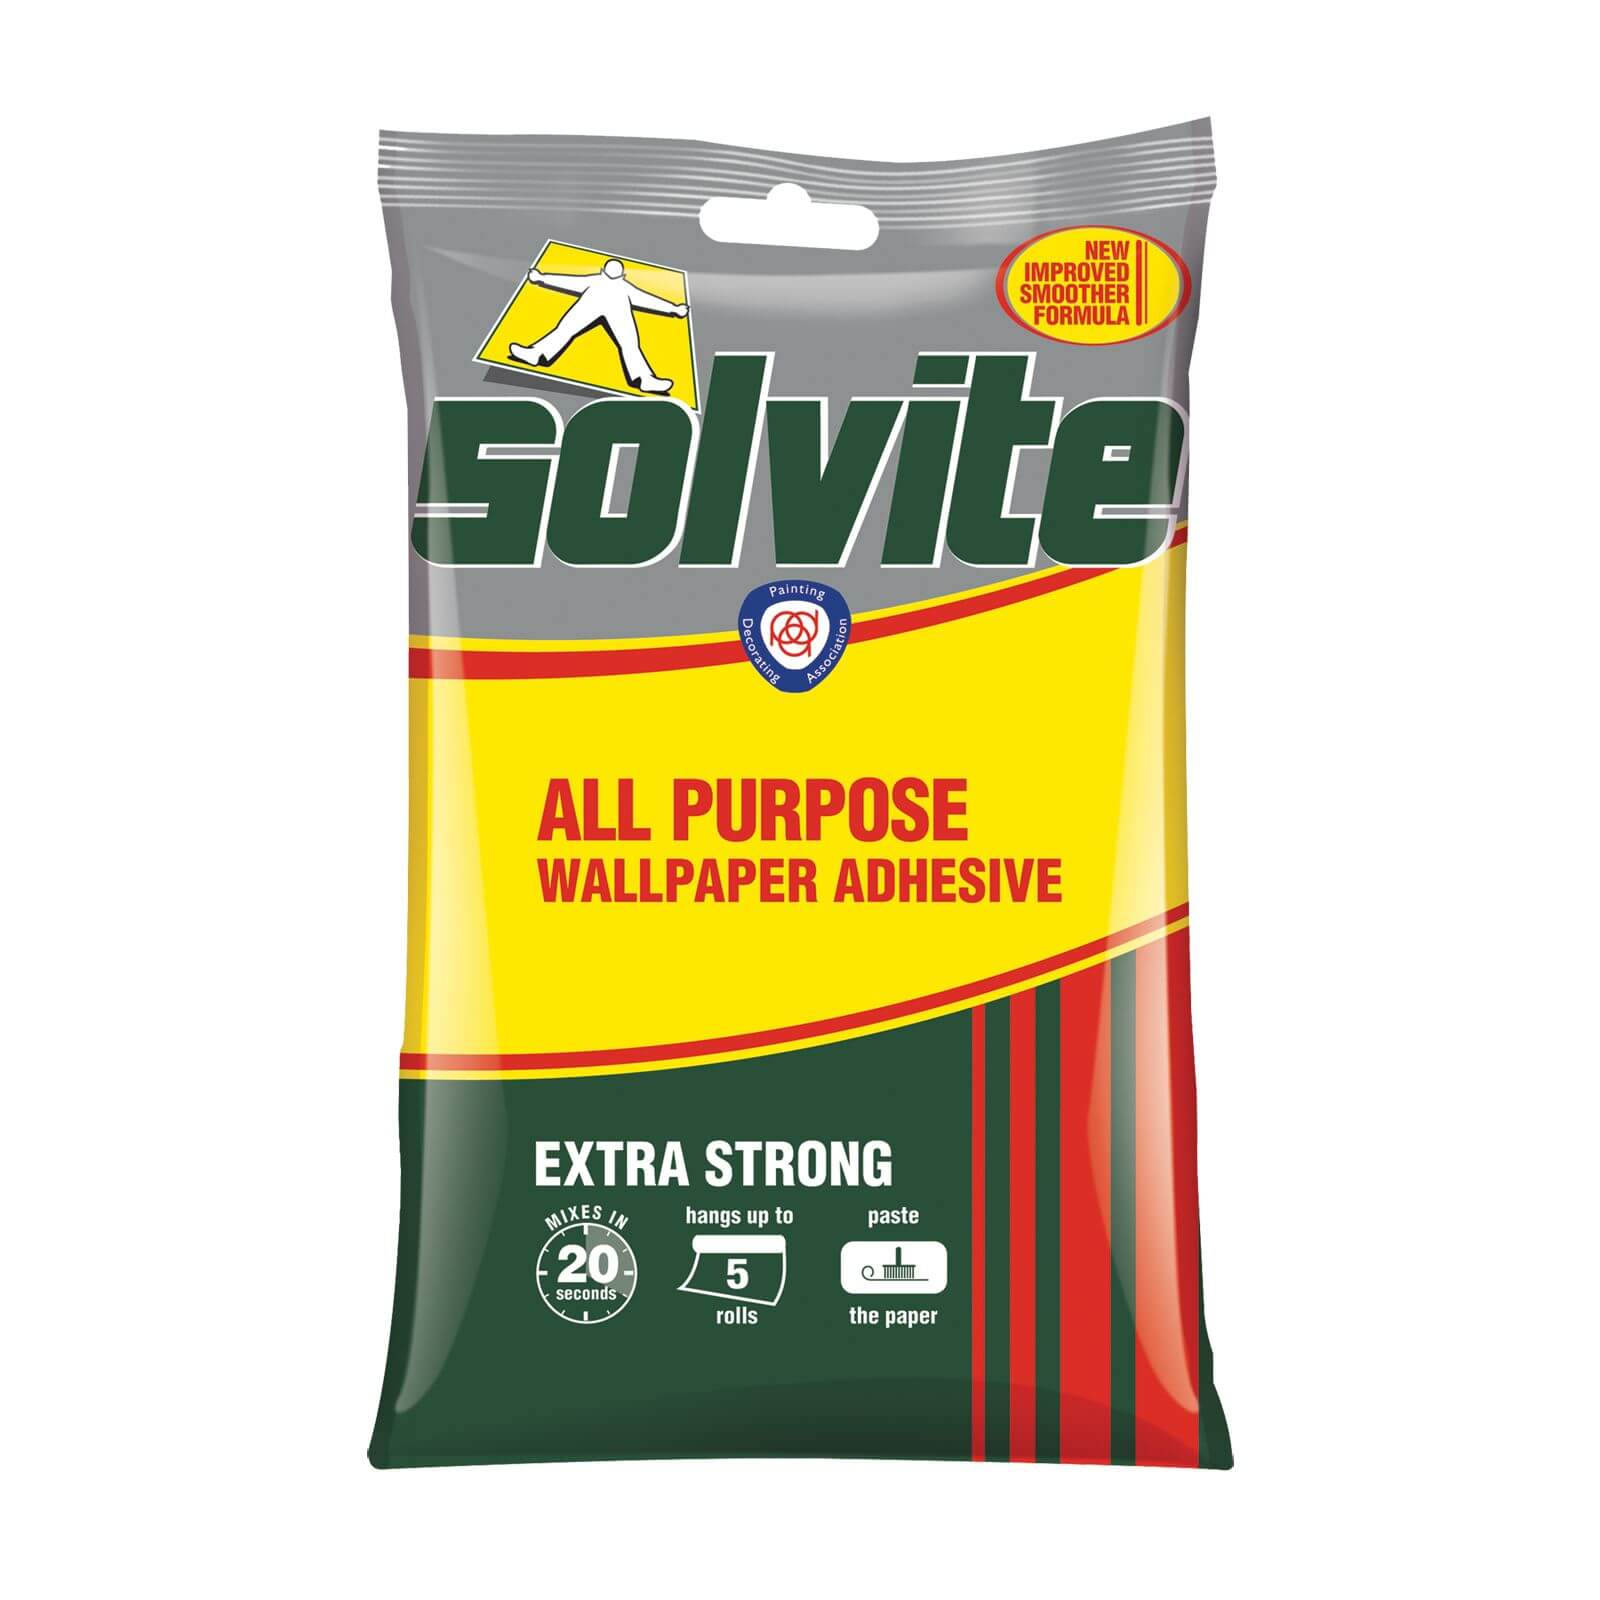 Solvite All Purpose Wallpaper Adhesive - 5 Roll Sachet